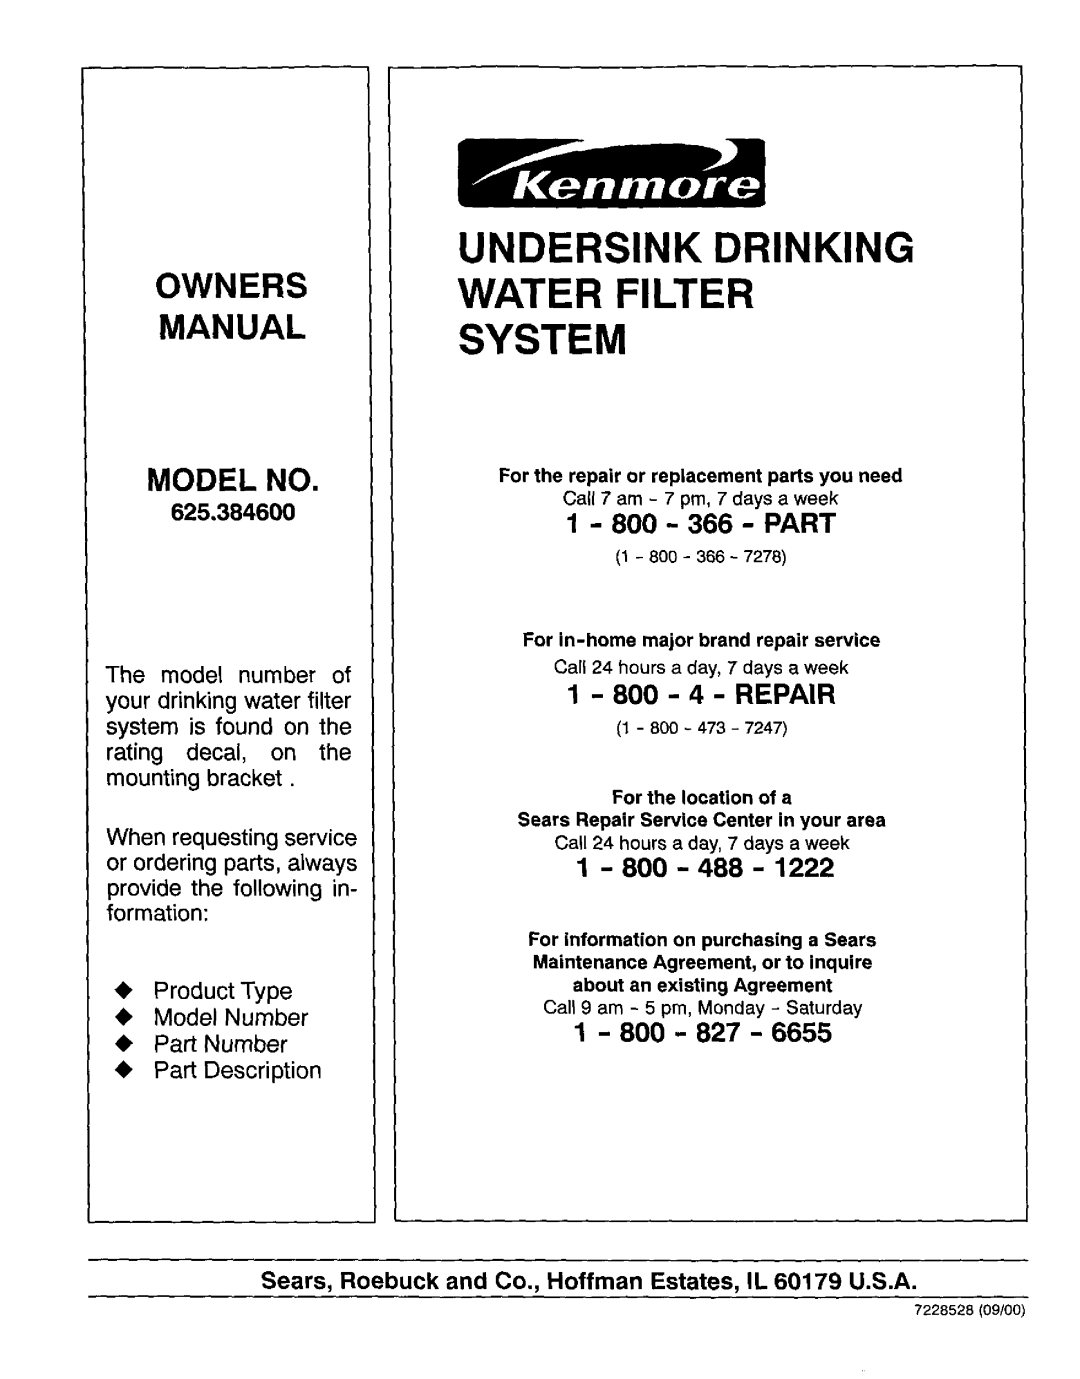 Kenmore 625.384600 1 - 800 - 827, 625,384600, Sears, Roebuck and Co., Hoffman Estates, IL 60179 U.S.A, Model No 